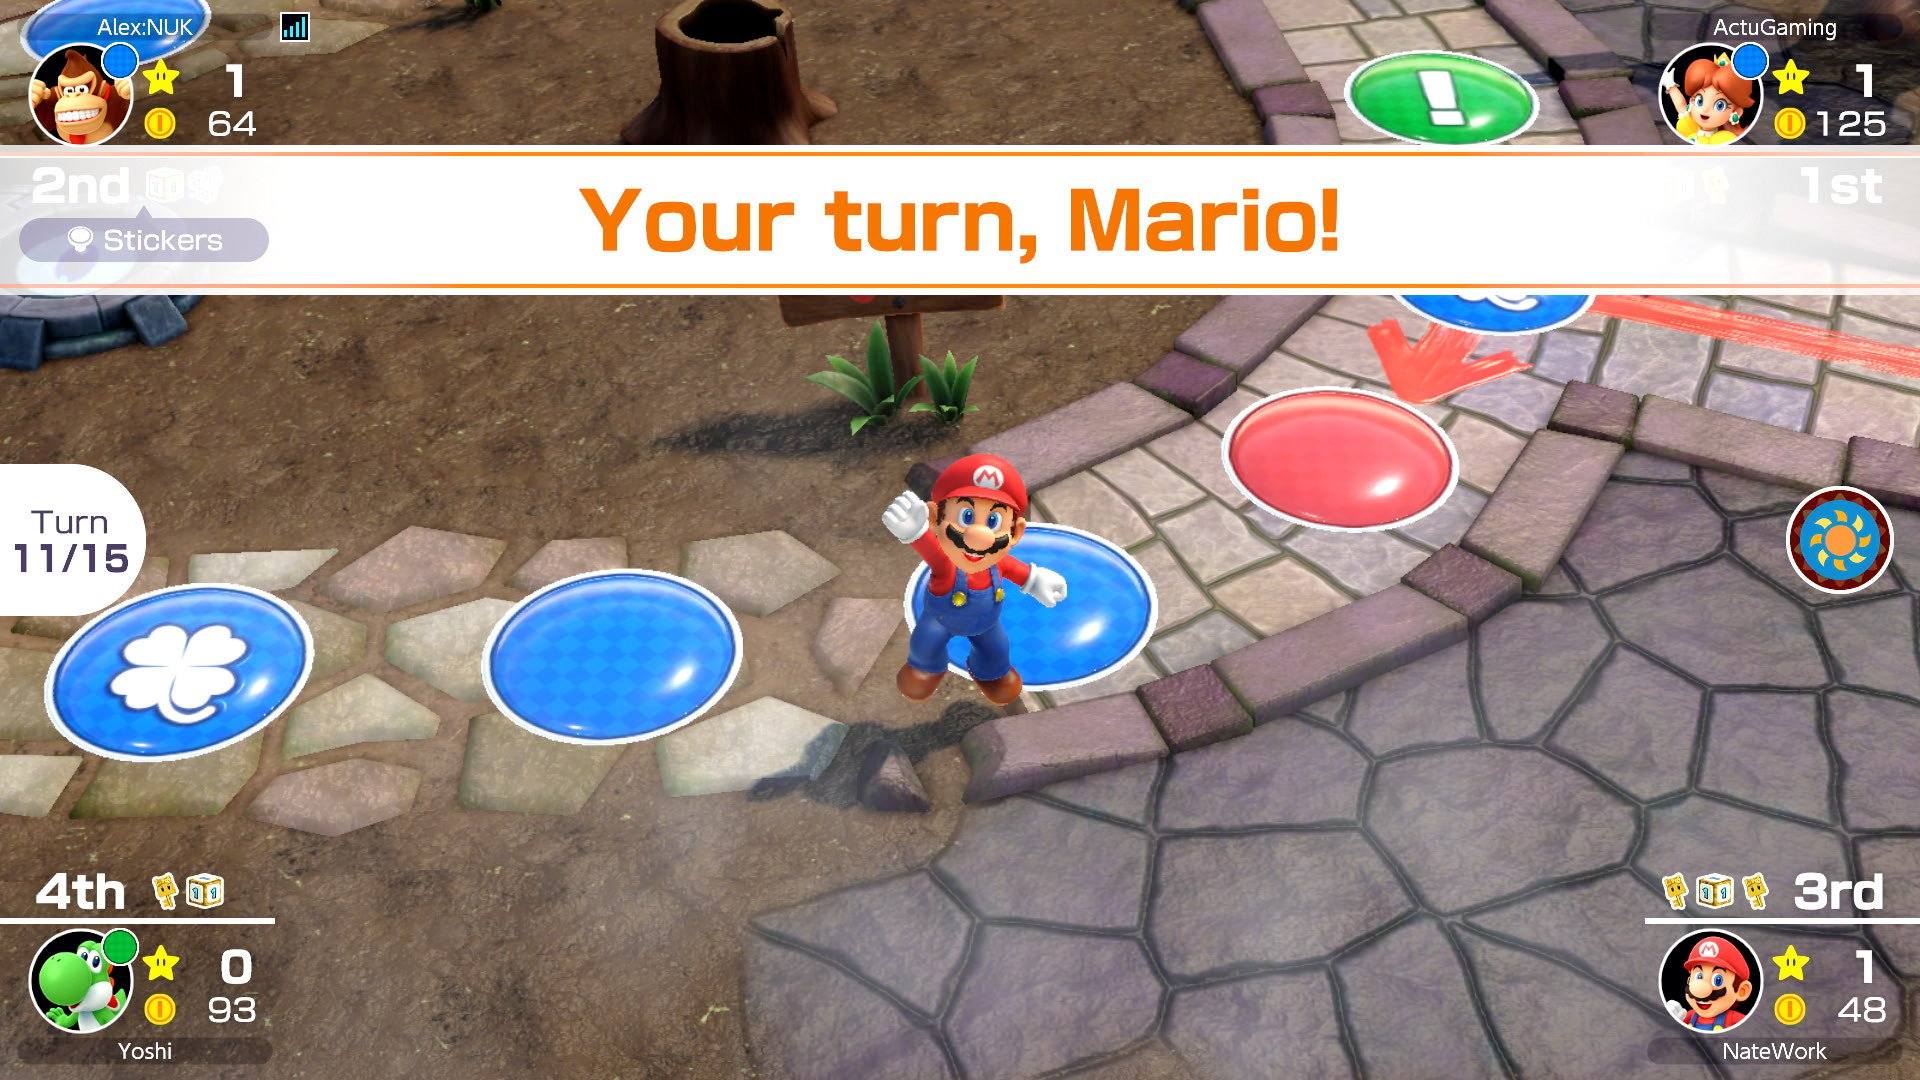 Nintendo Mario Party Superstars (Nintendo Switch) (European Version)